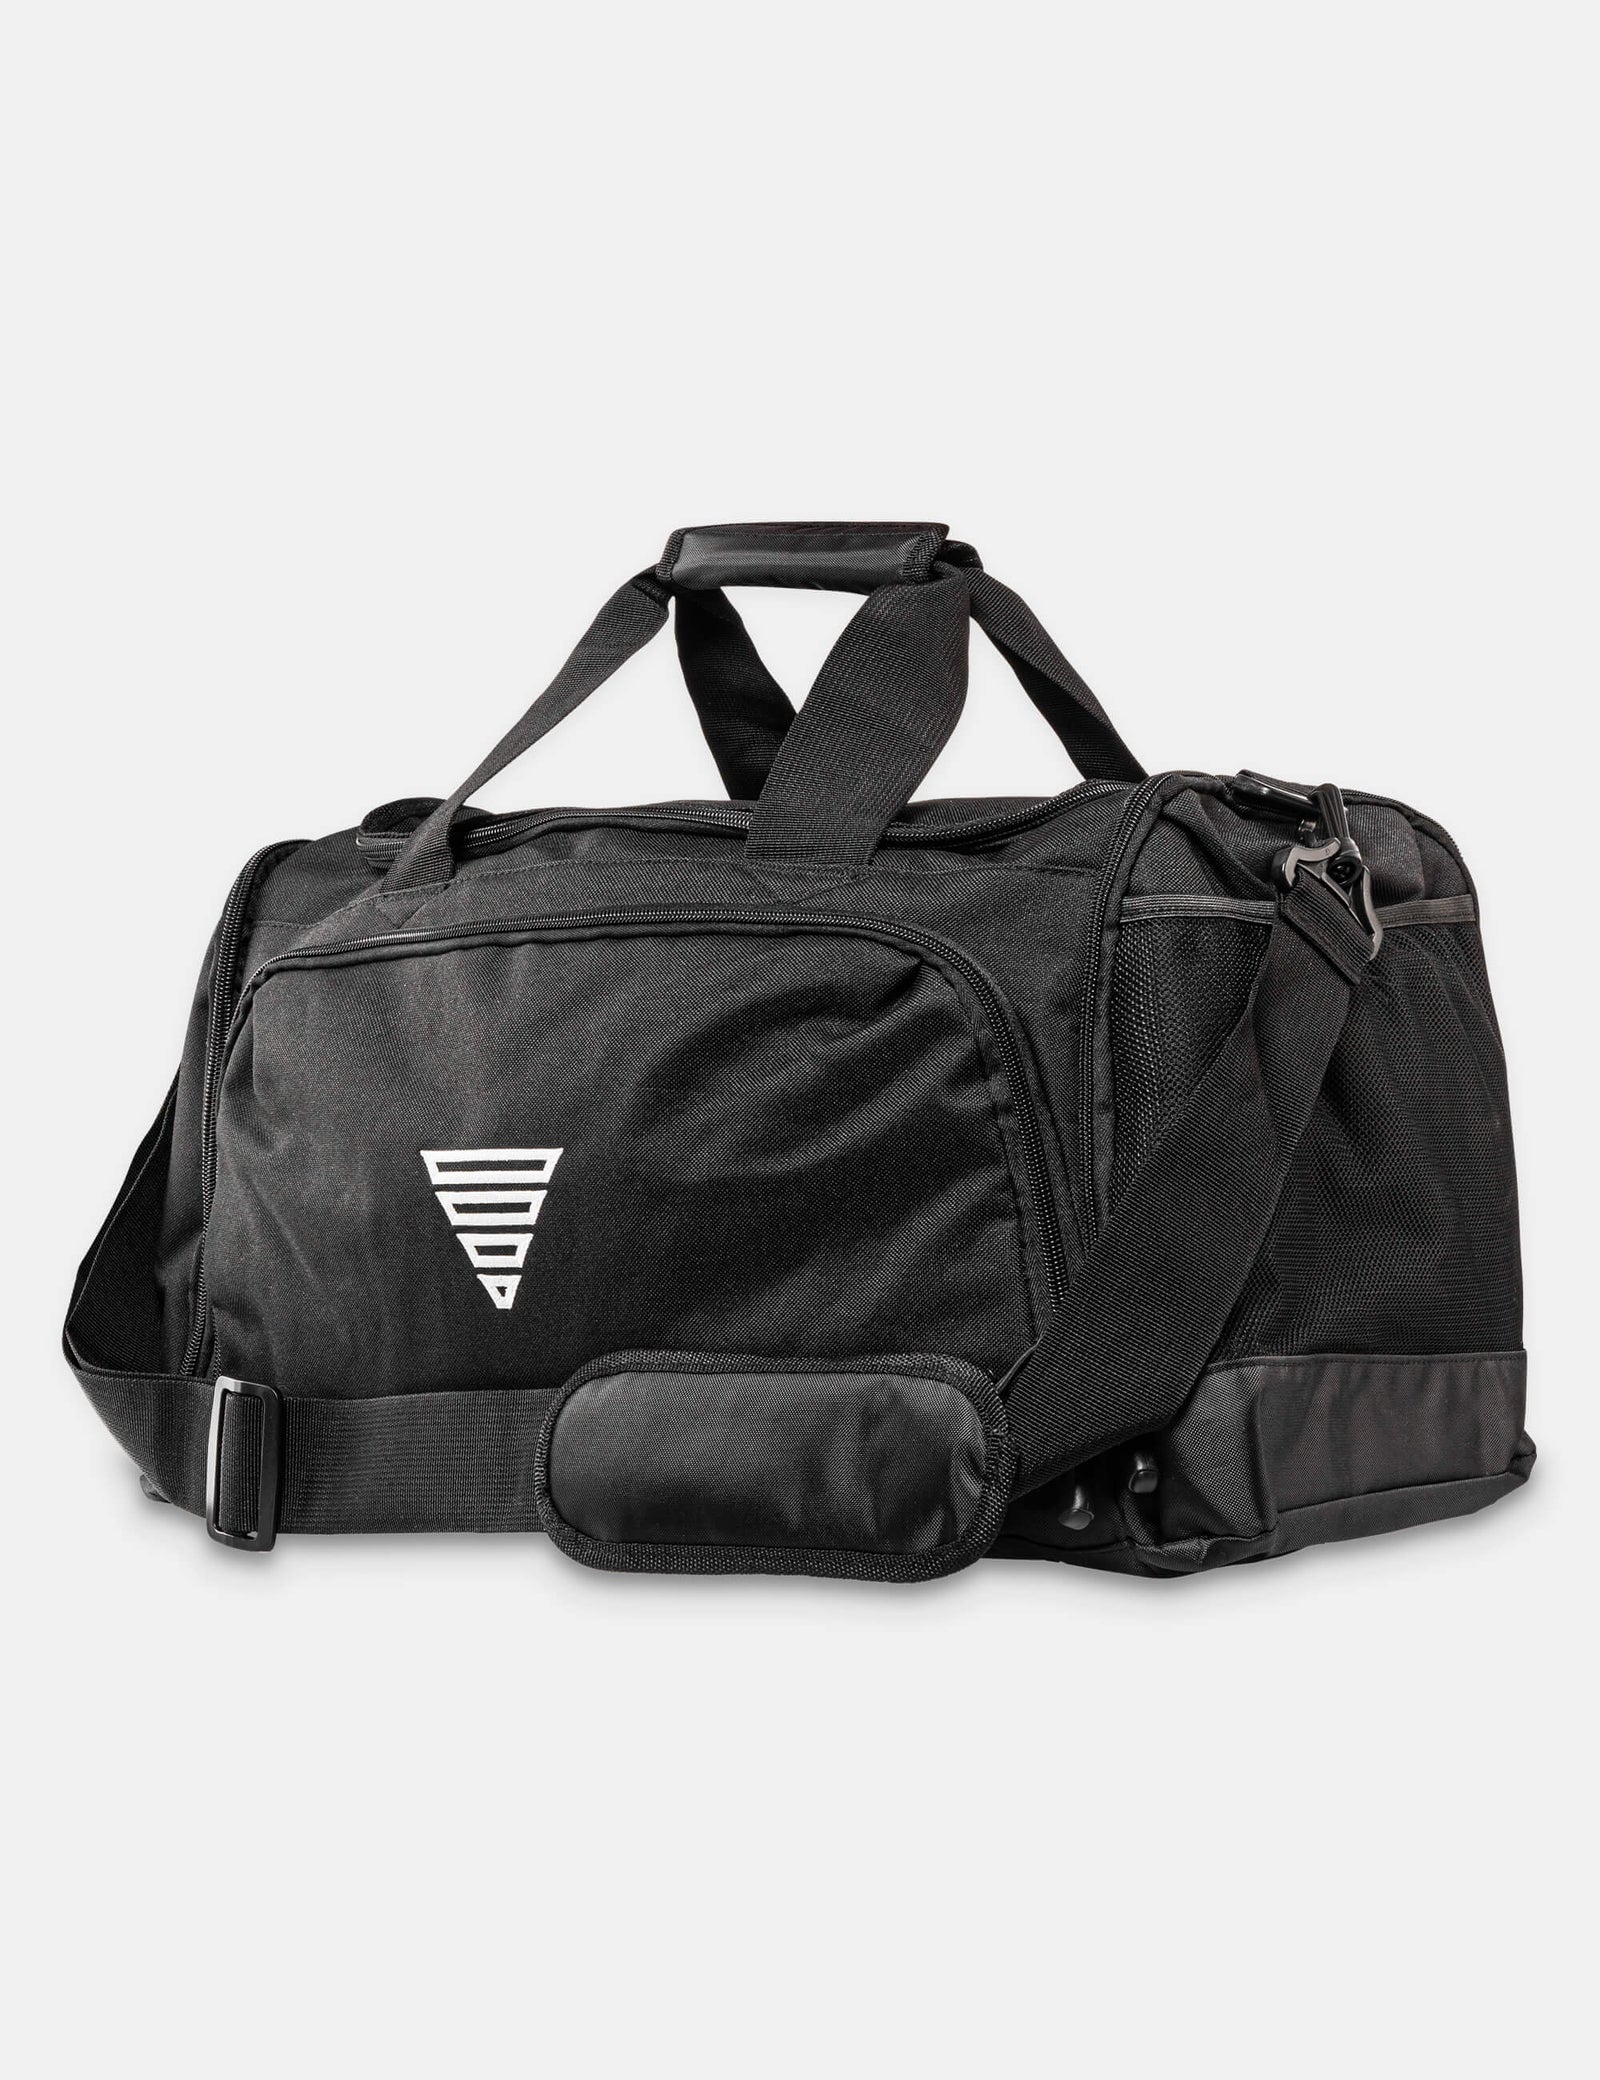 Premium Sports Bag 2.0 Black For Your Workout | GORNATION